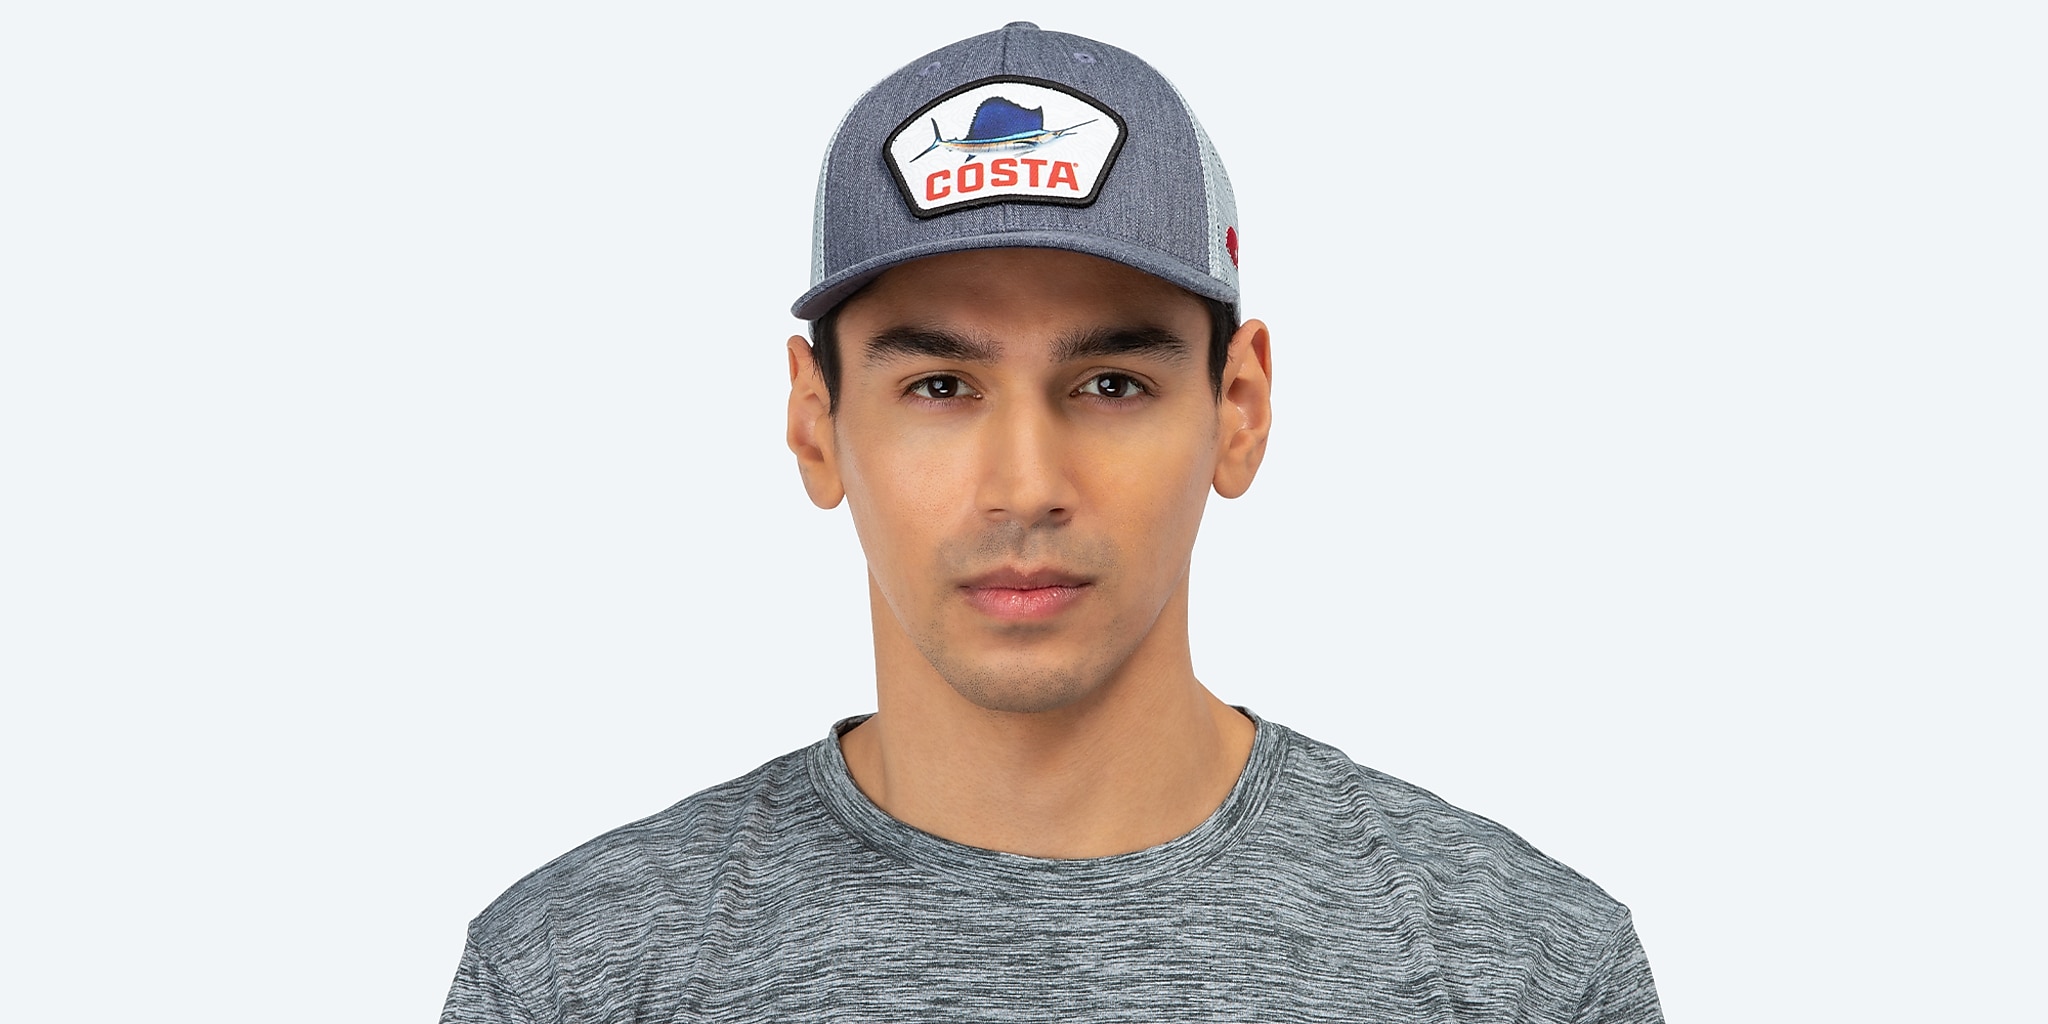 Costa Del Mar Unisex Adult Trucker Hat